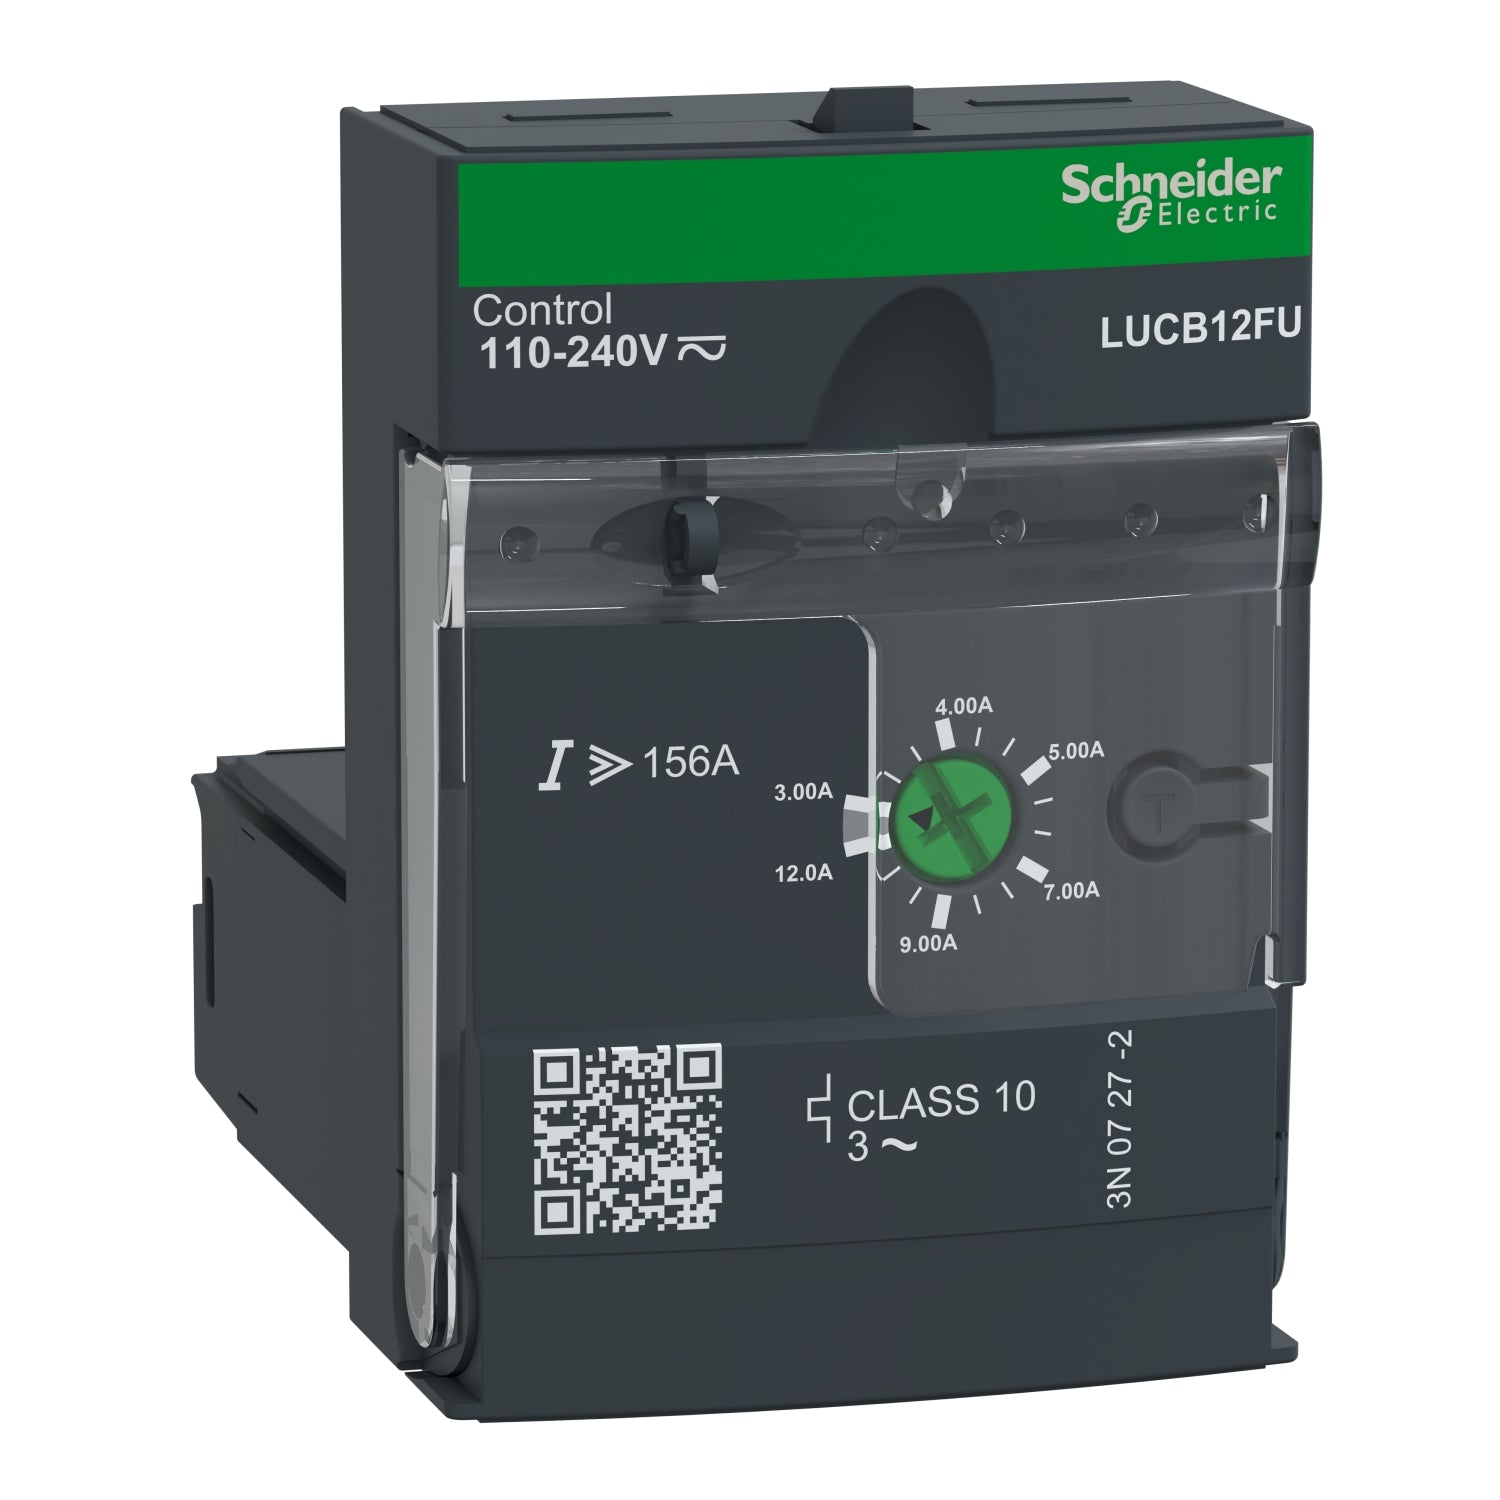 LUCB12FU | Schneider Electric Advanced control unit